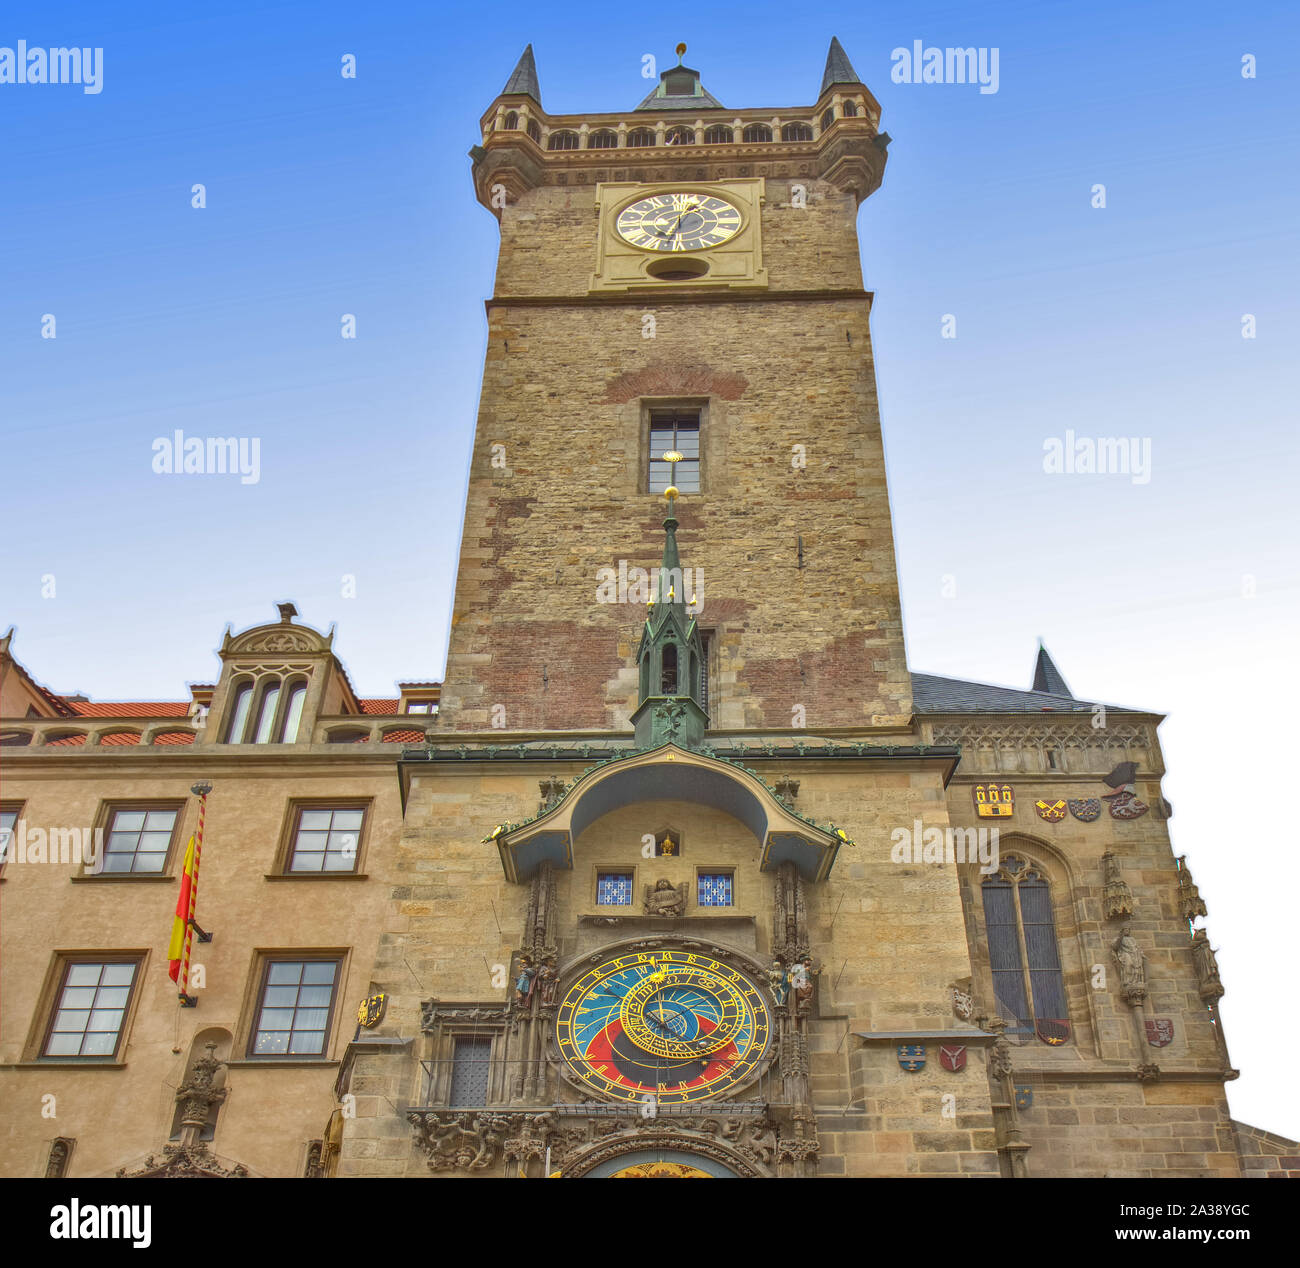 El Reloj Astronómico de Praga, Praga o Orloj, es un reloj astronómico medieval localizado en Praga Foto de stock